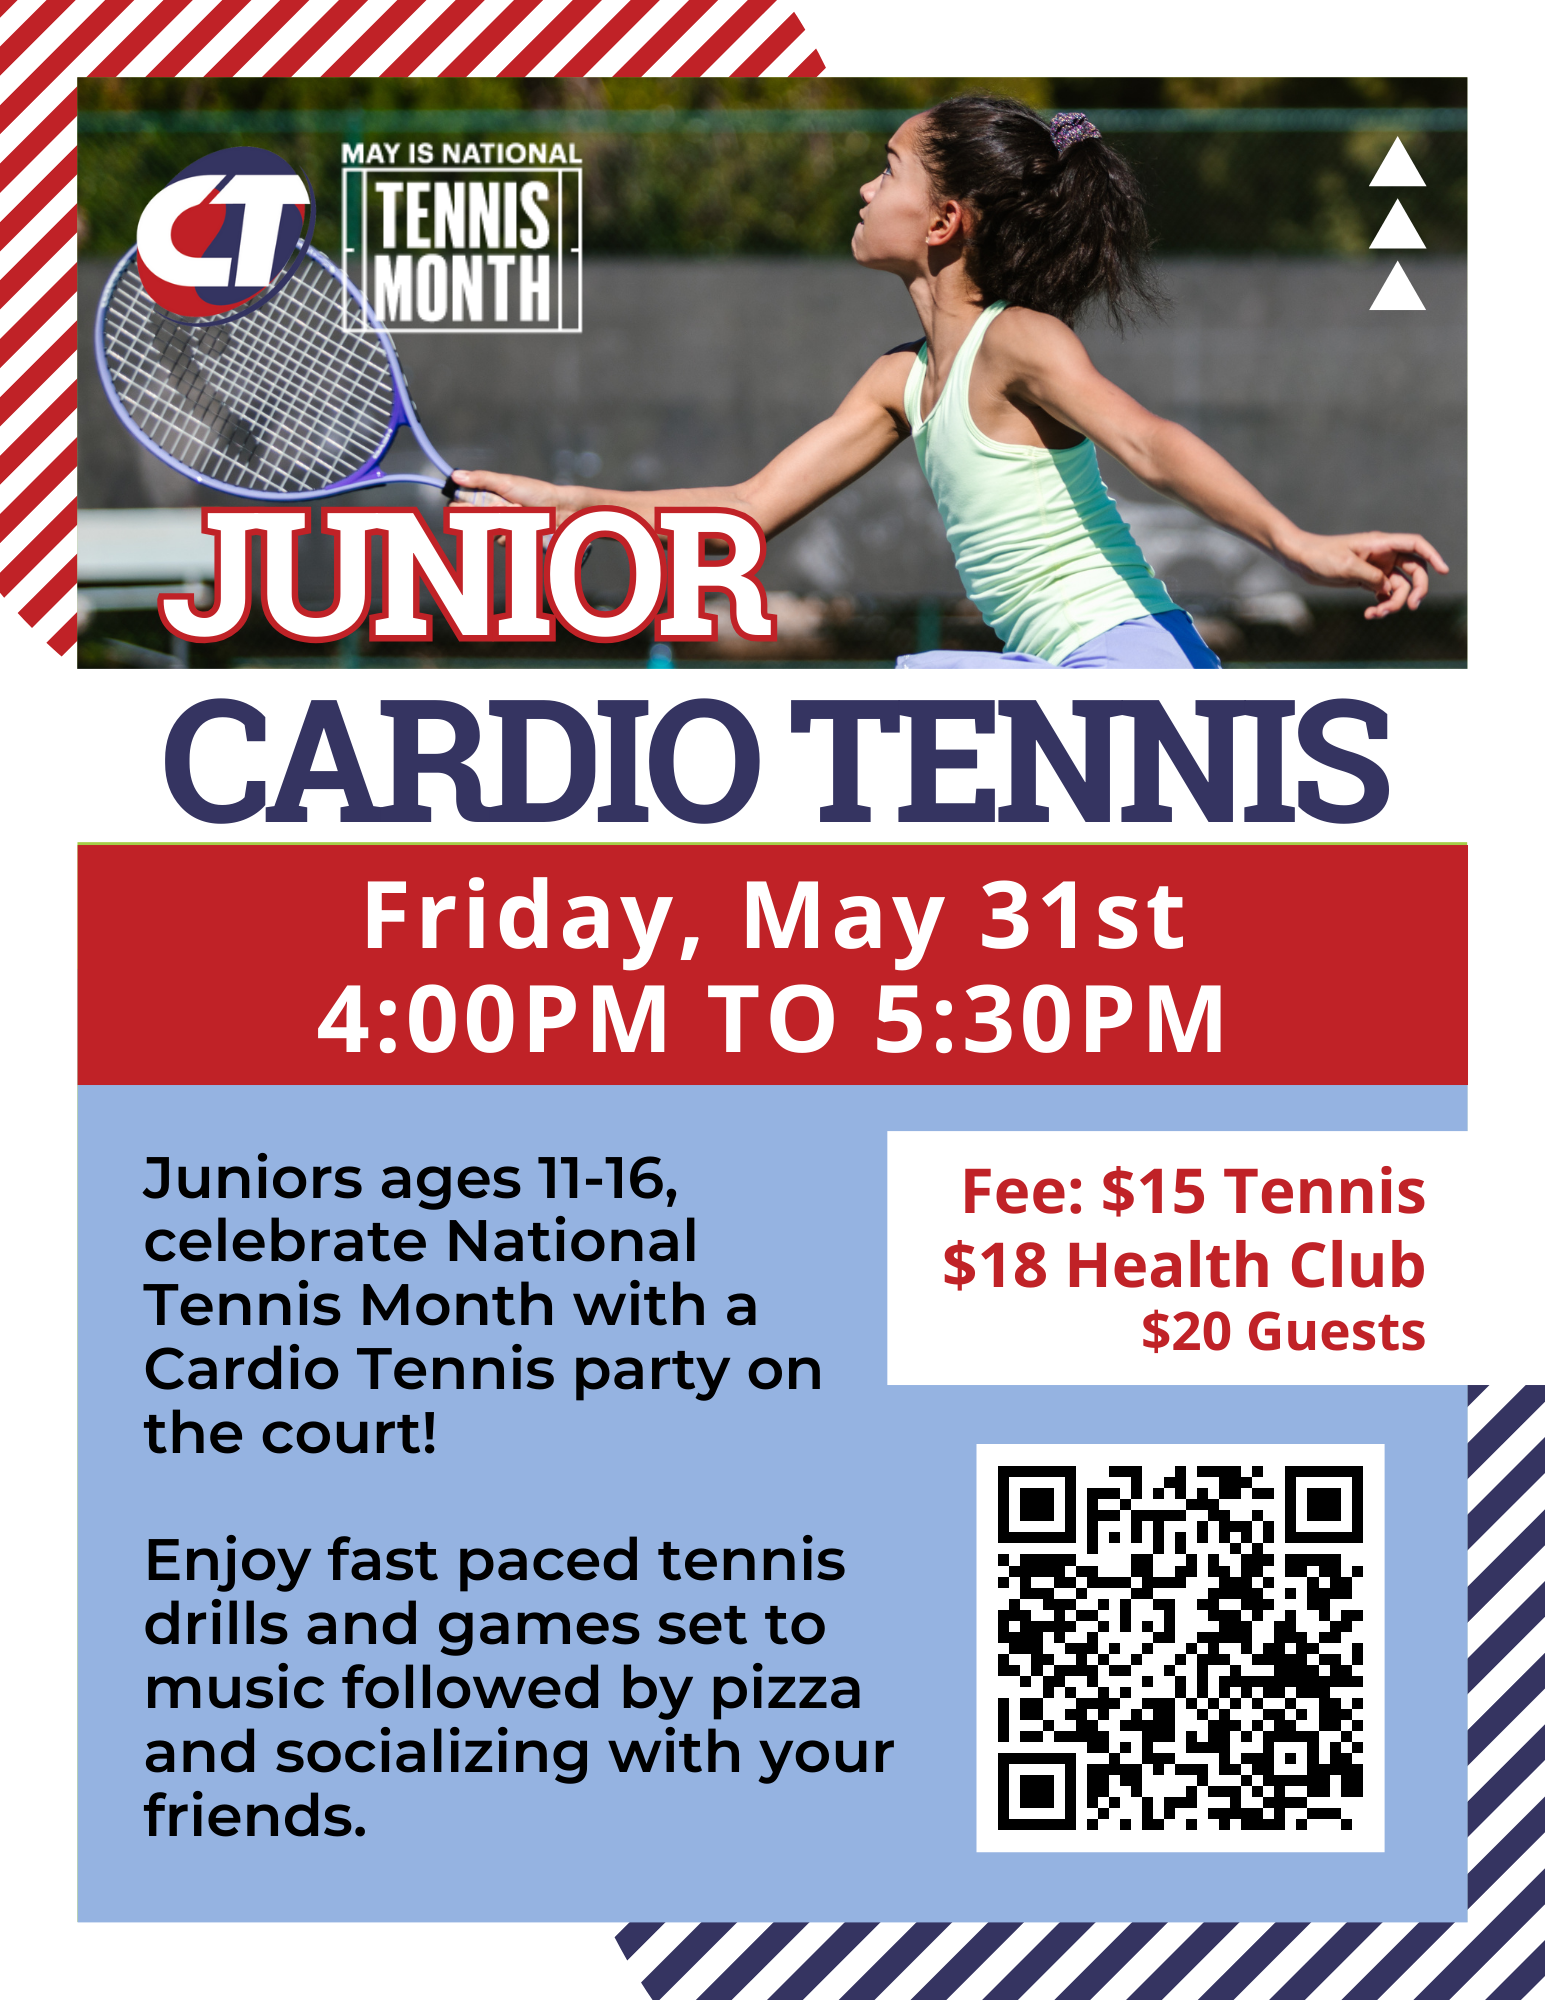 Wheaton Sport Center Junior Cardio Tennis May 31st 4-5:30pm